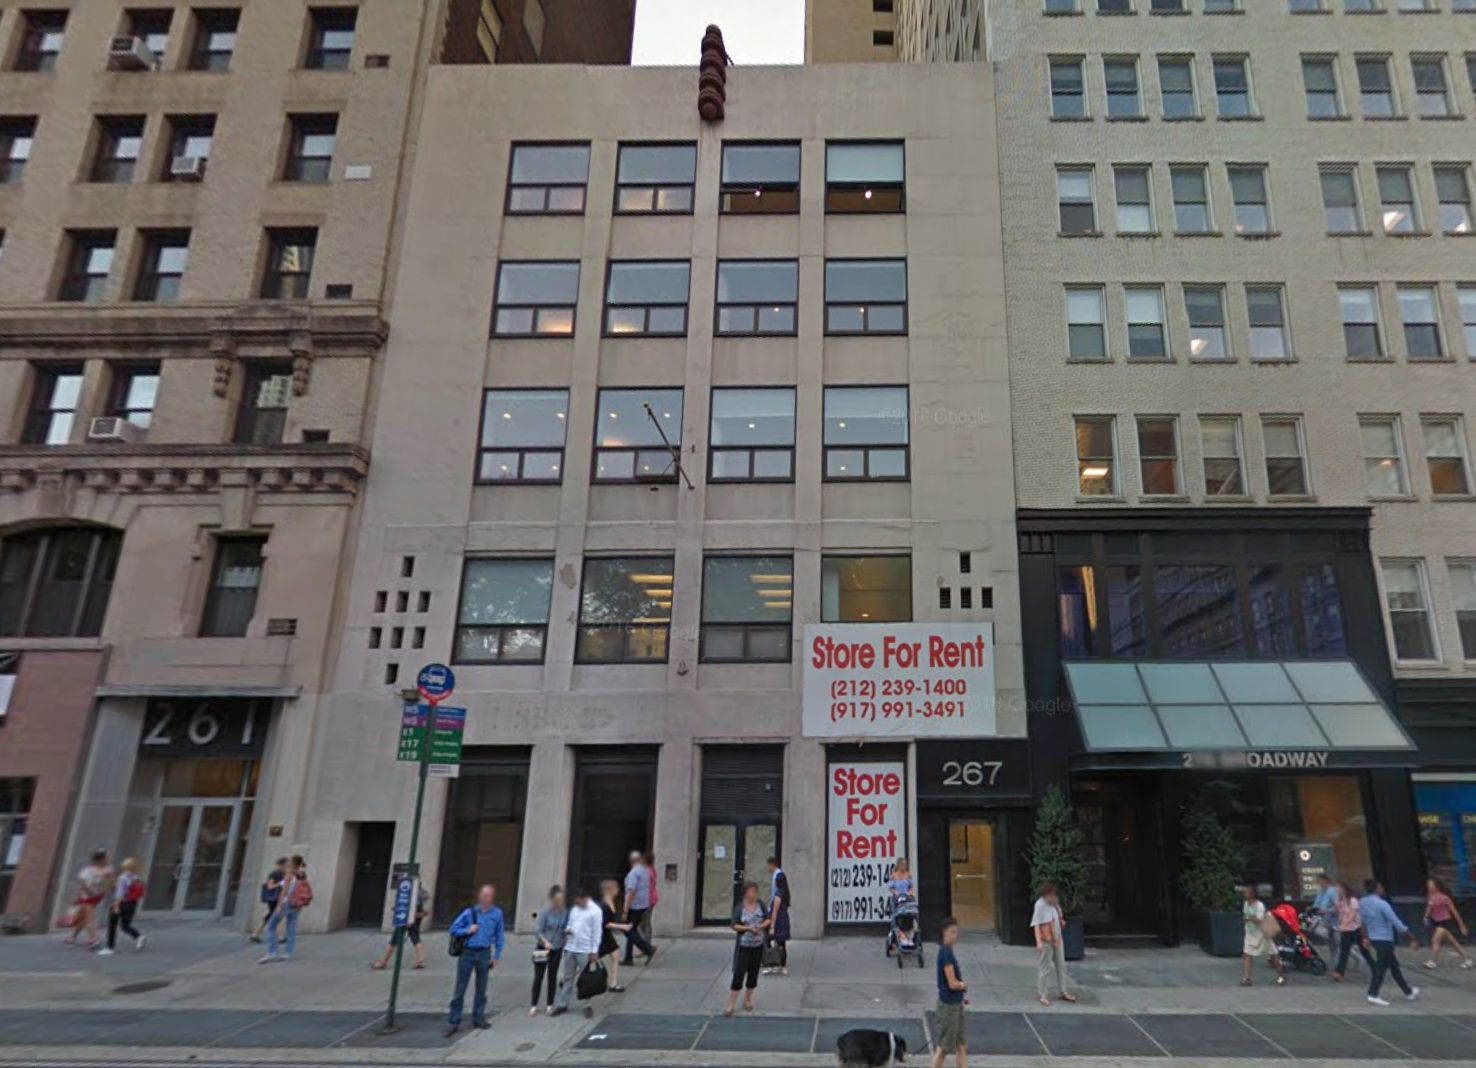 265-267 Broadway. image via Google Maps